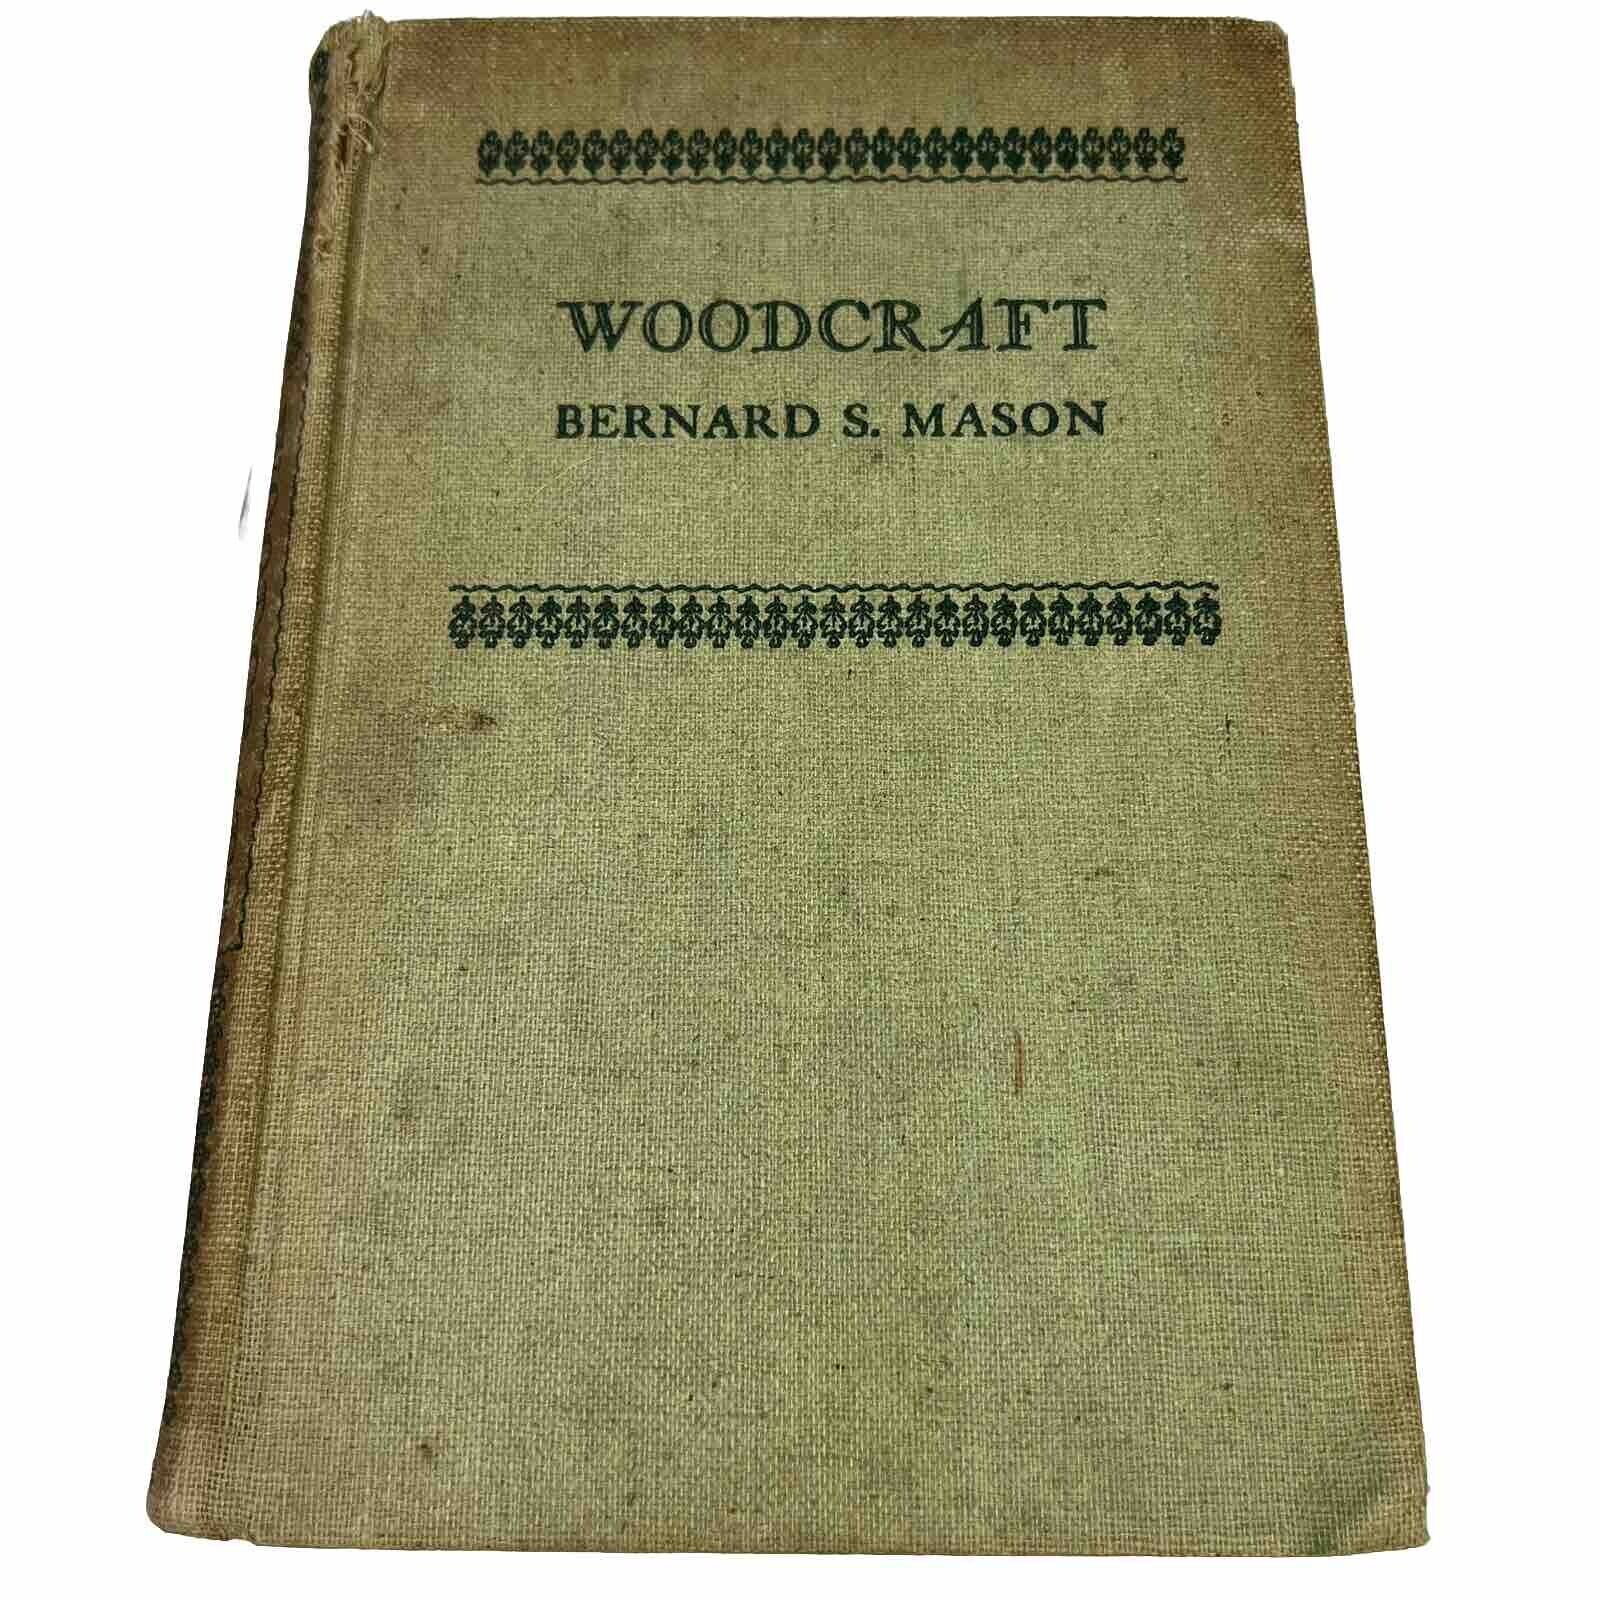 BSA Woodcraft by Bernard S. Mason Hardback 1939 BS-815